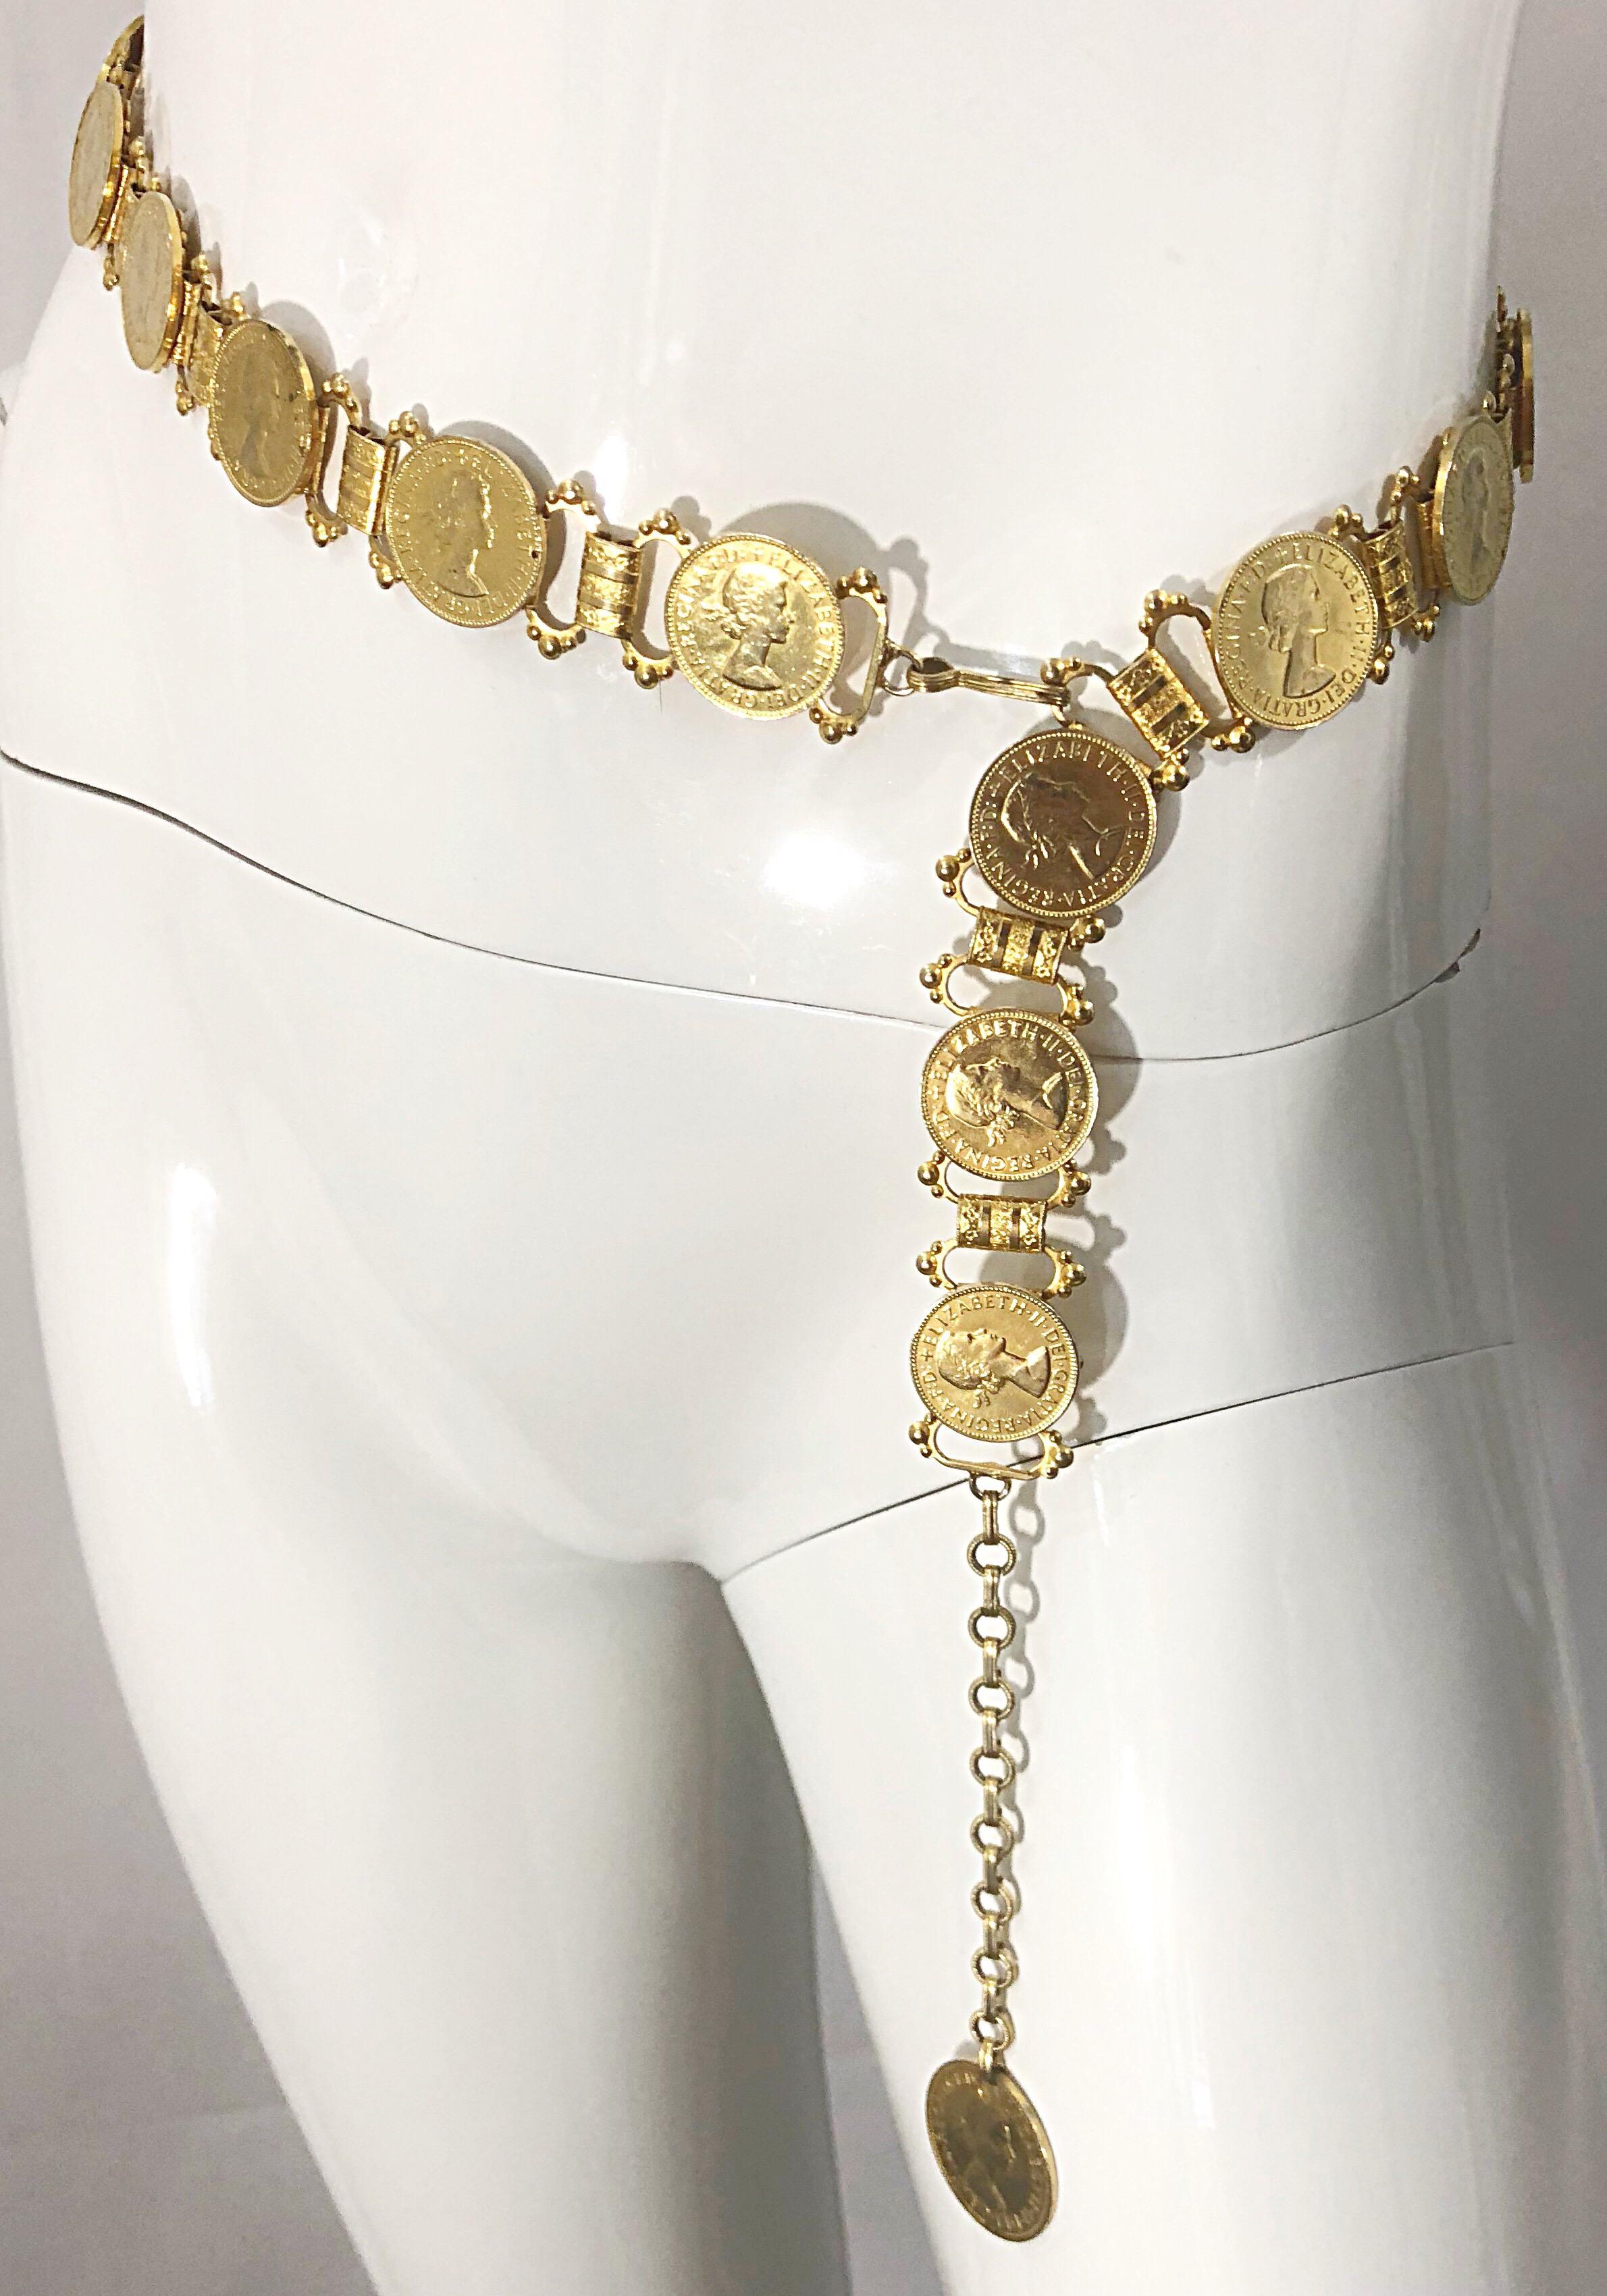 Elizabeth Dei Gratia 1960s Gold Coin Vintage 60s Novelty Chain Belt or Necklace 2